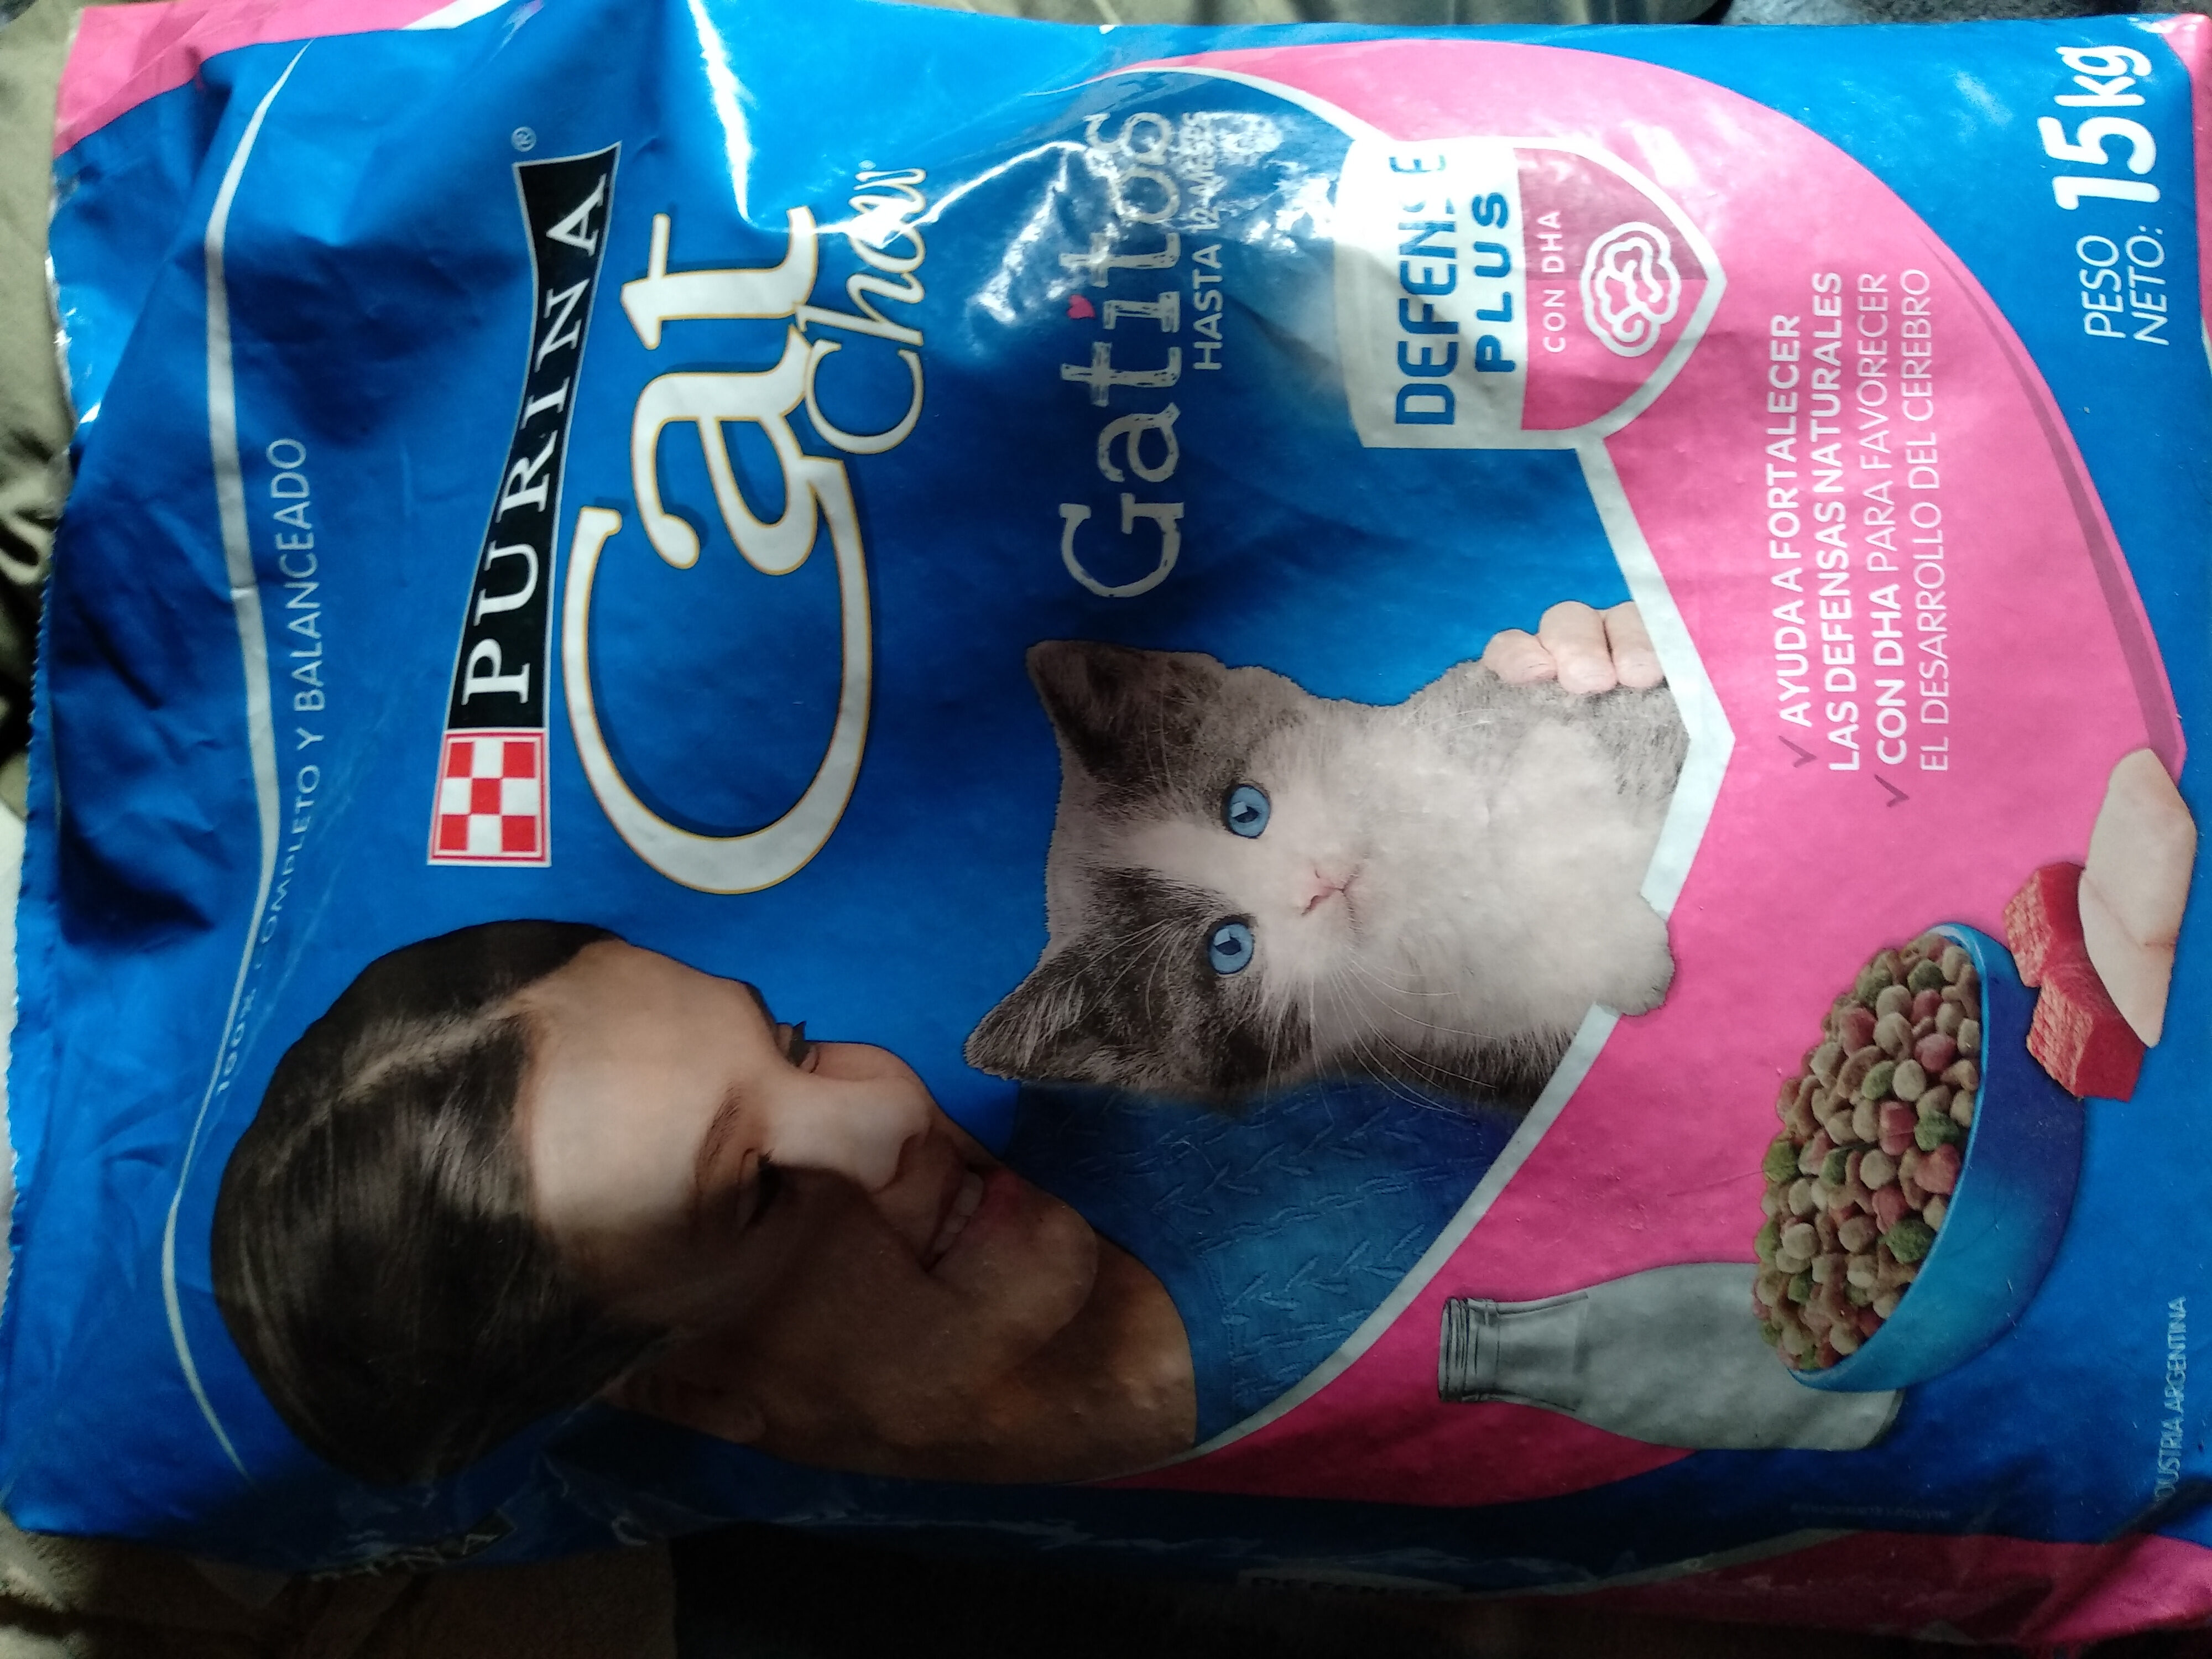 Cat chow gatitos - Product - es